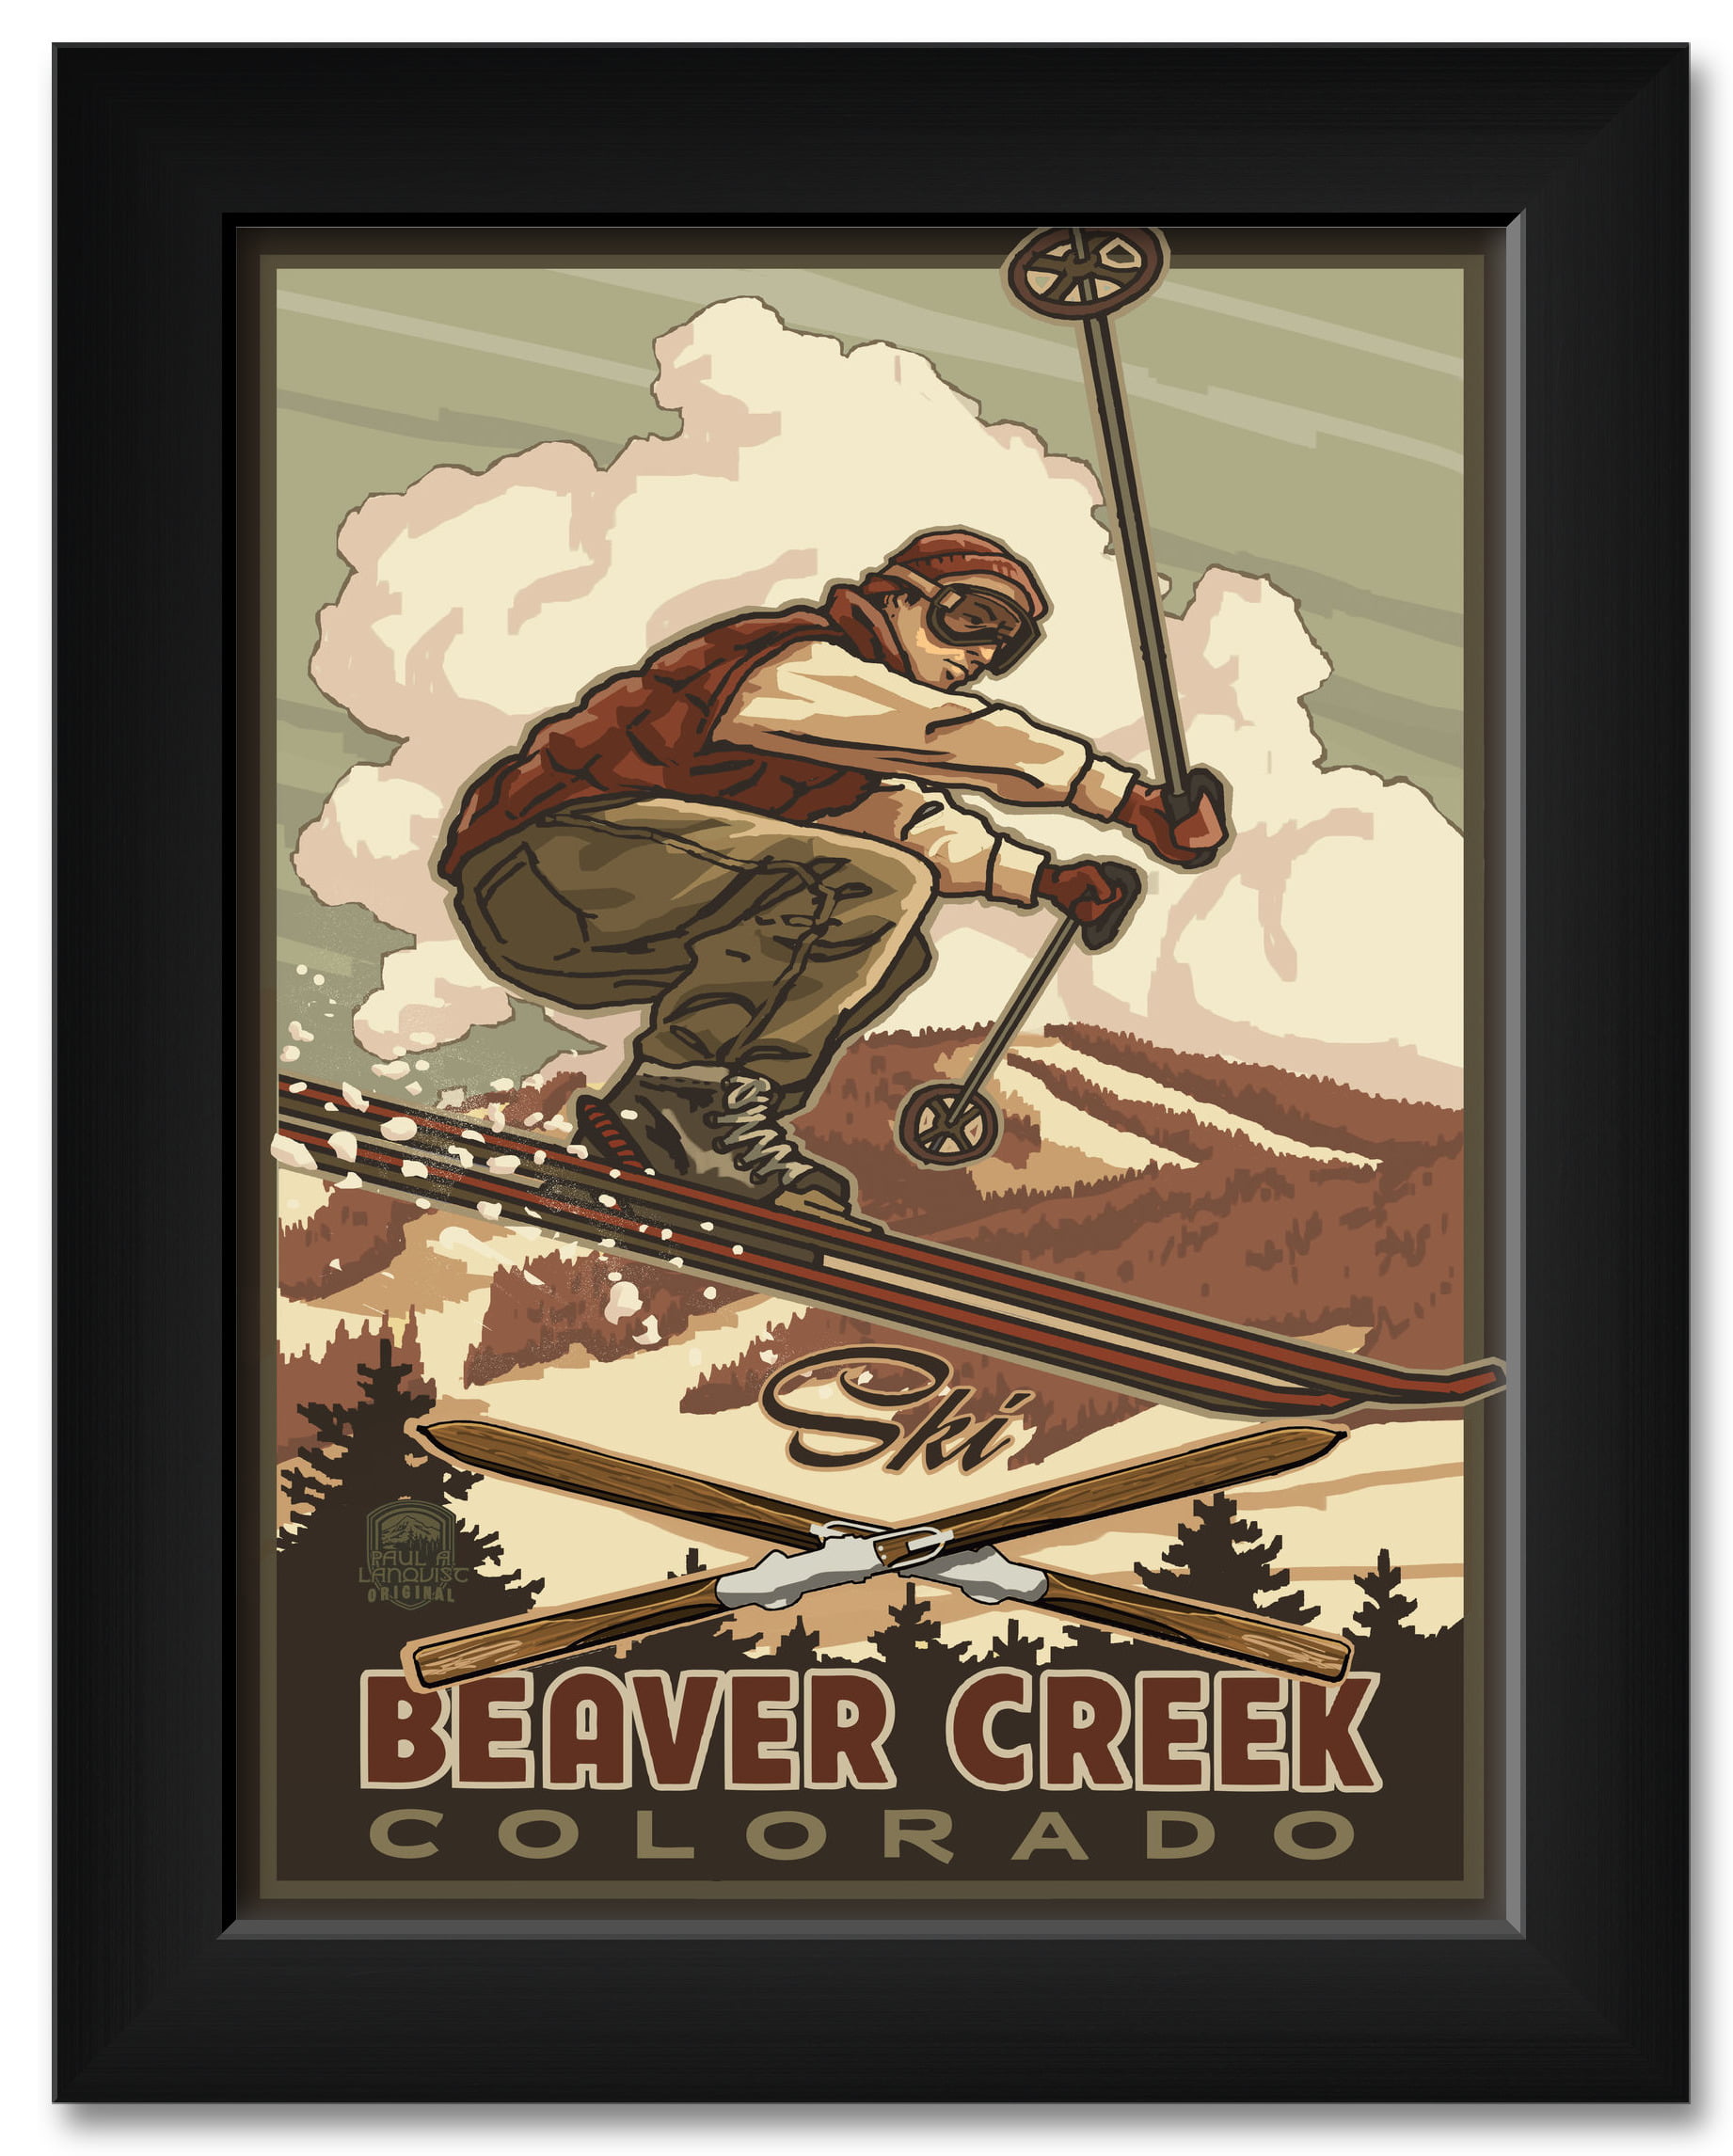 Beaver Creek Colorado Catching Air Snowboarder Giclee Art Print Poster from Original Travel Artwork by Artist Paul A Lanquist